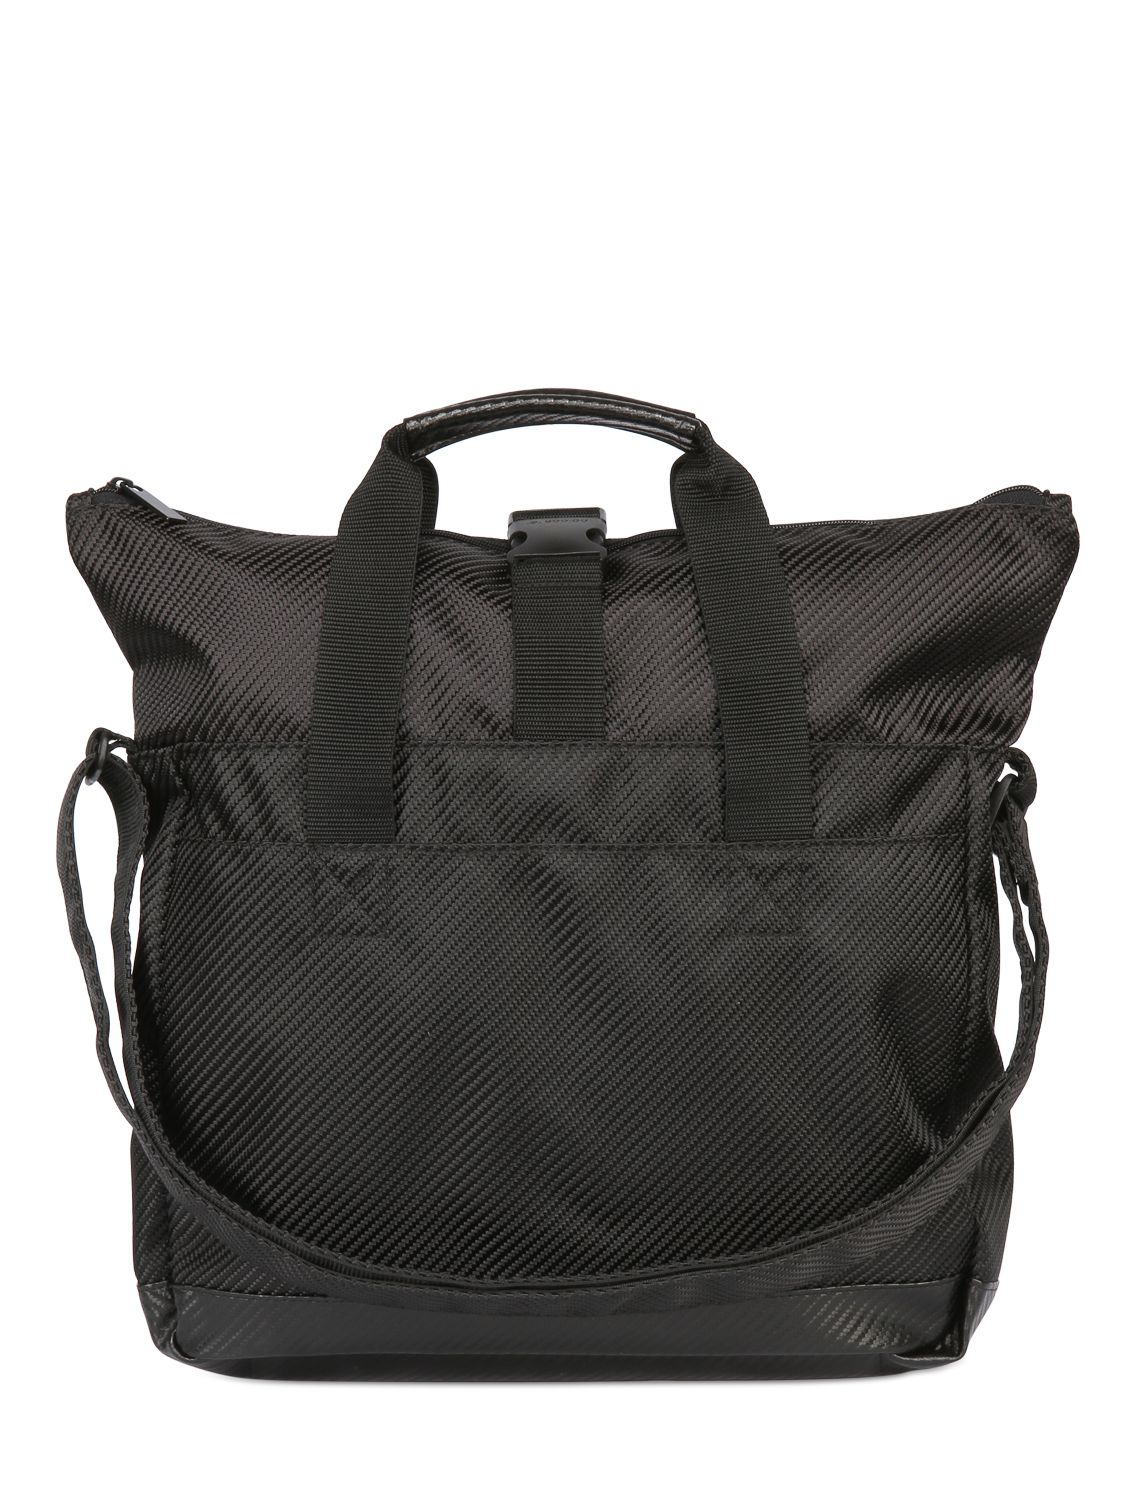 Adidas originals by italia independent Nylon Tote Bag in Black | Lyst